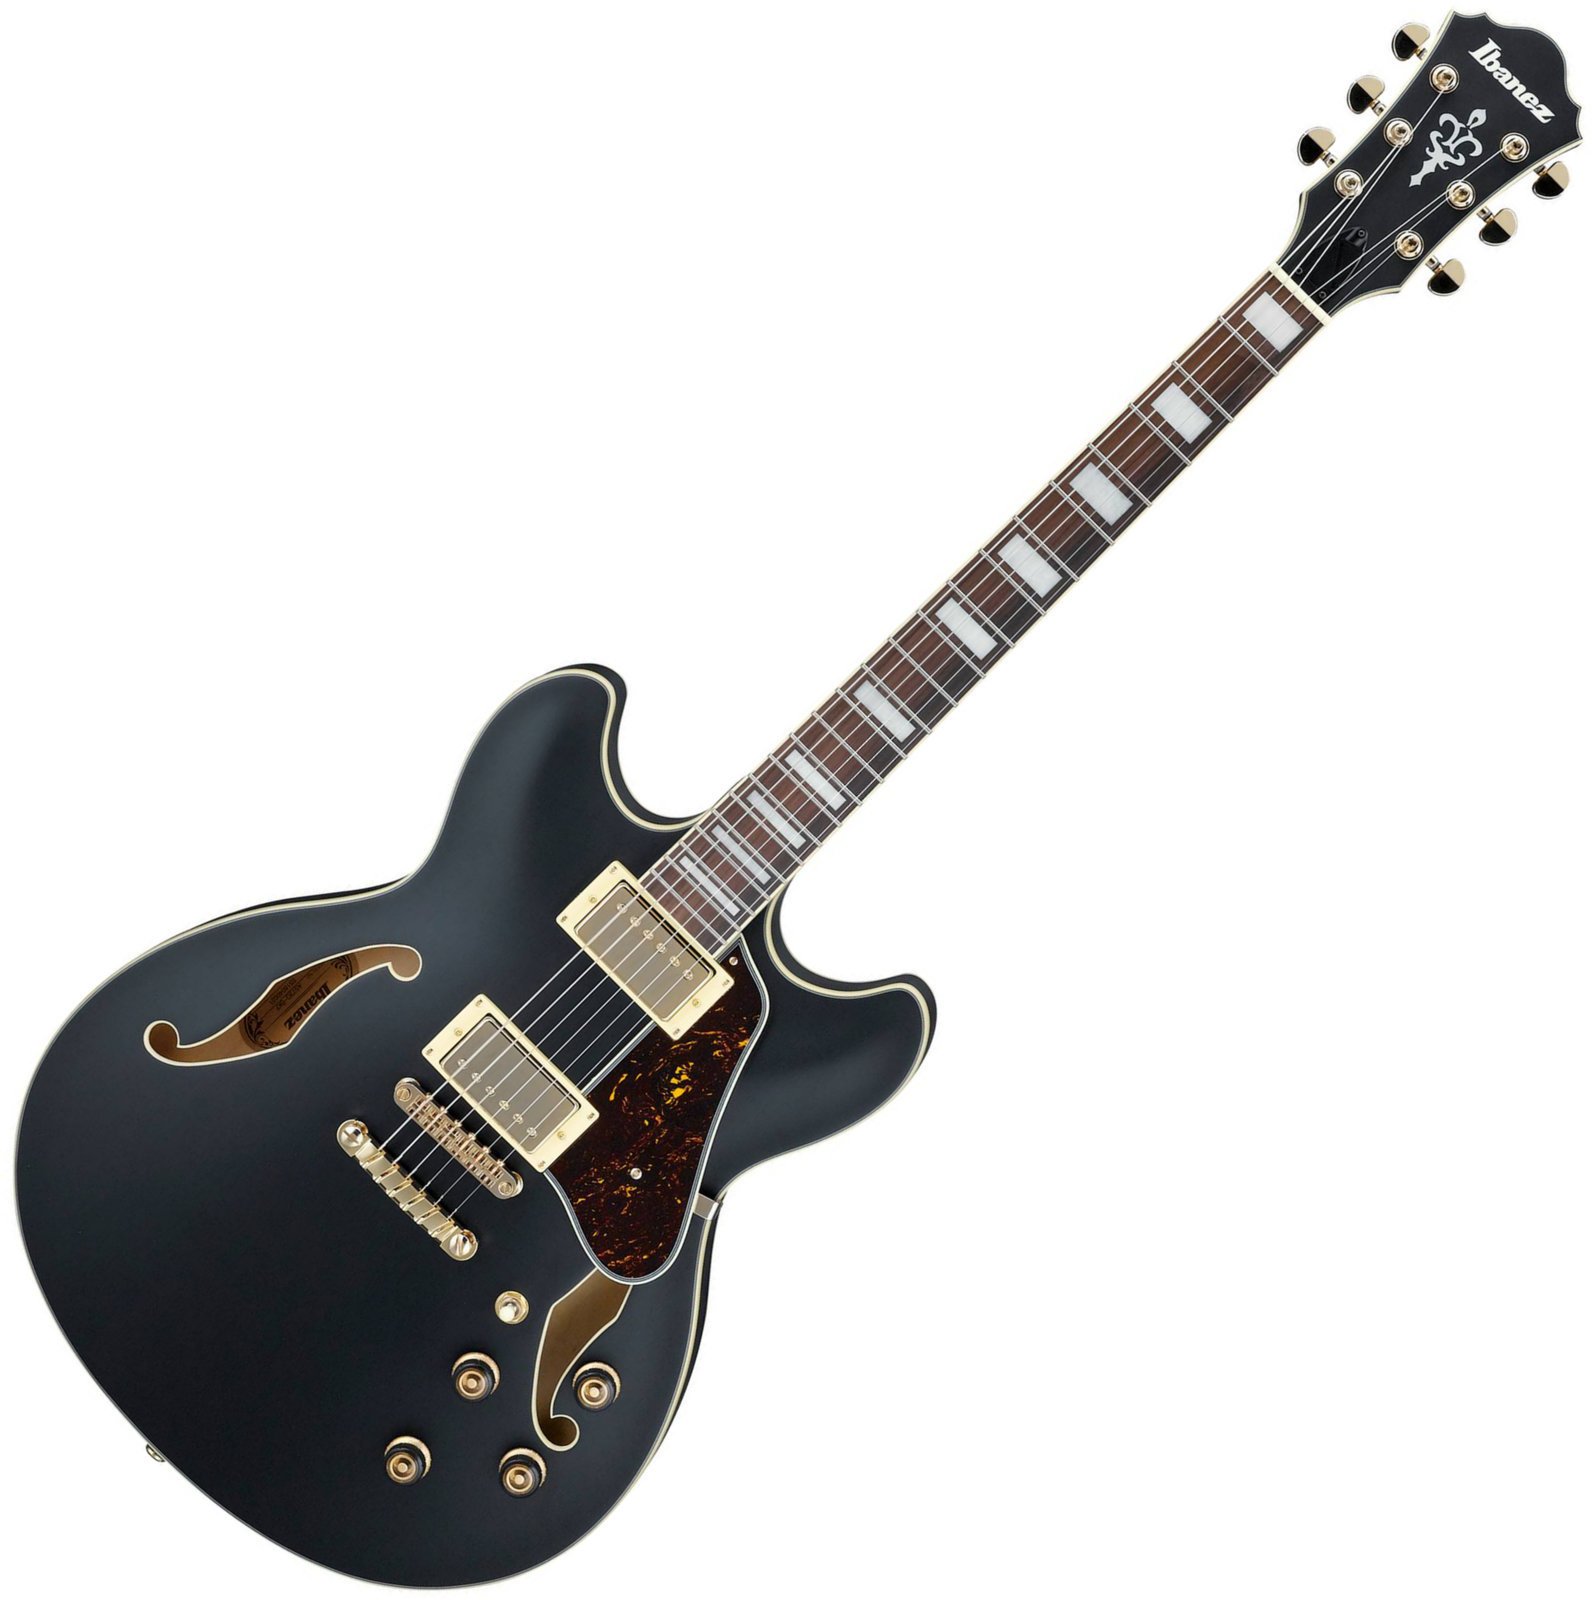 Semiakustická gitara Ibanez AS73G Black Fade